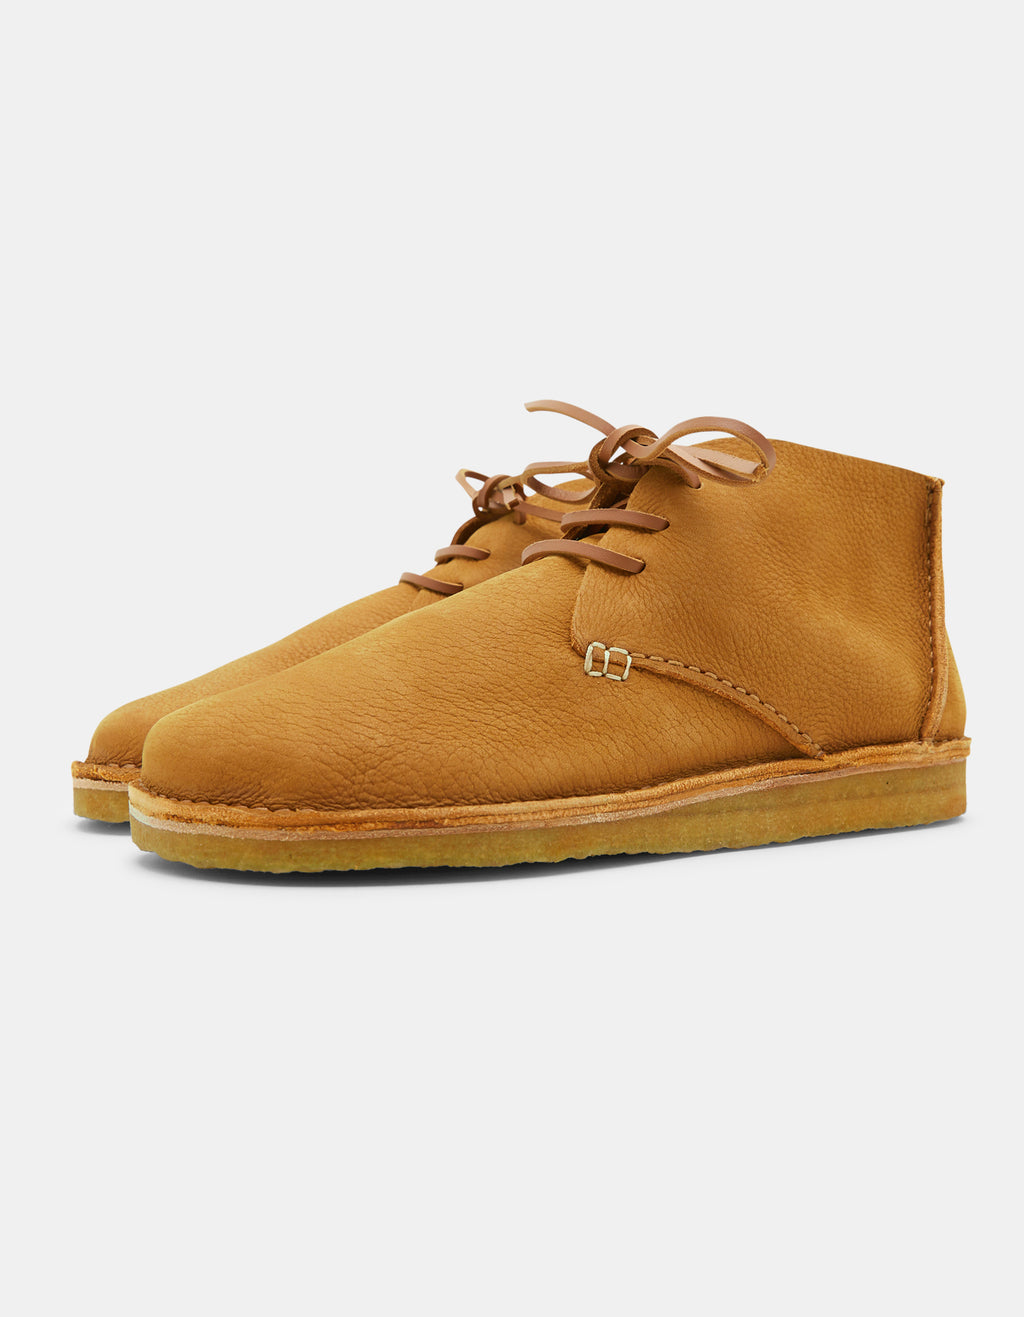 Autumn Winter 19 Collection – Yogi Footwear